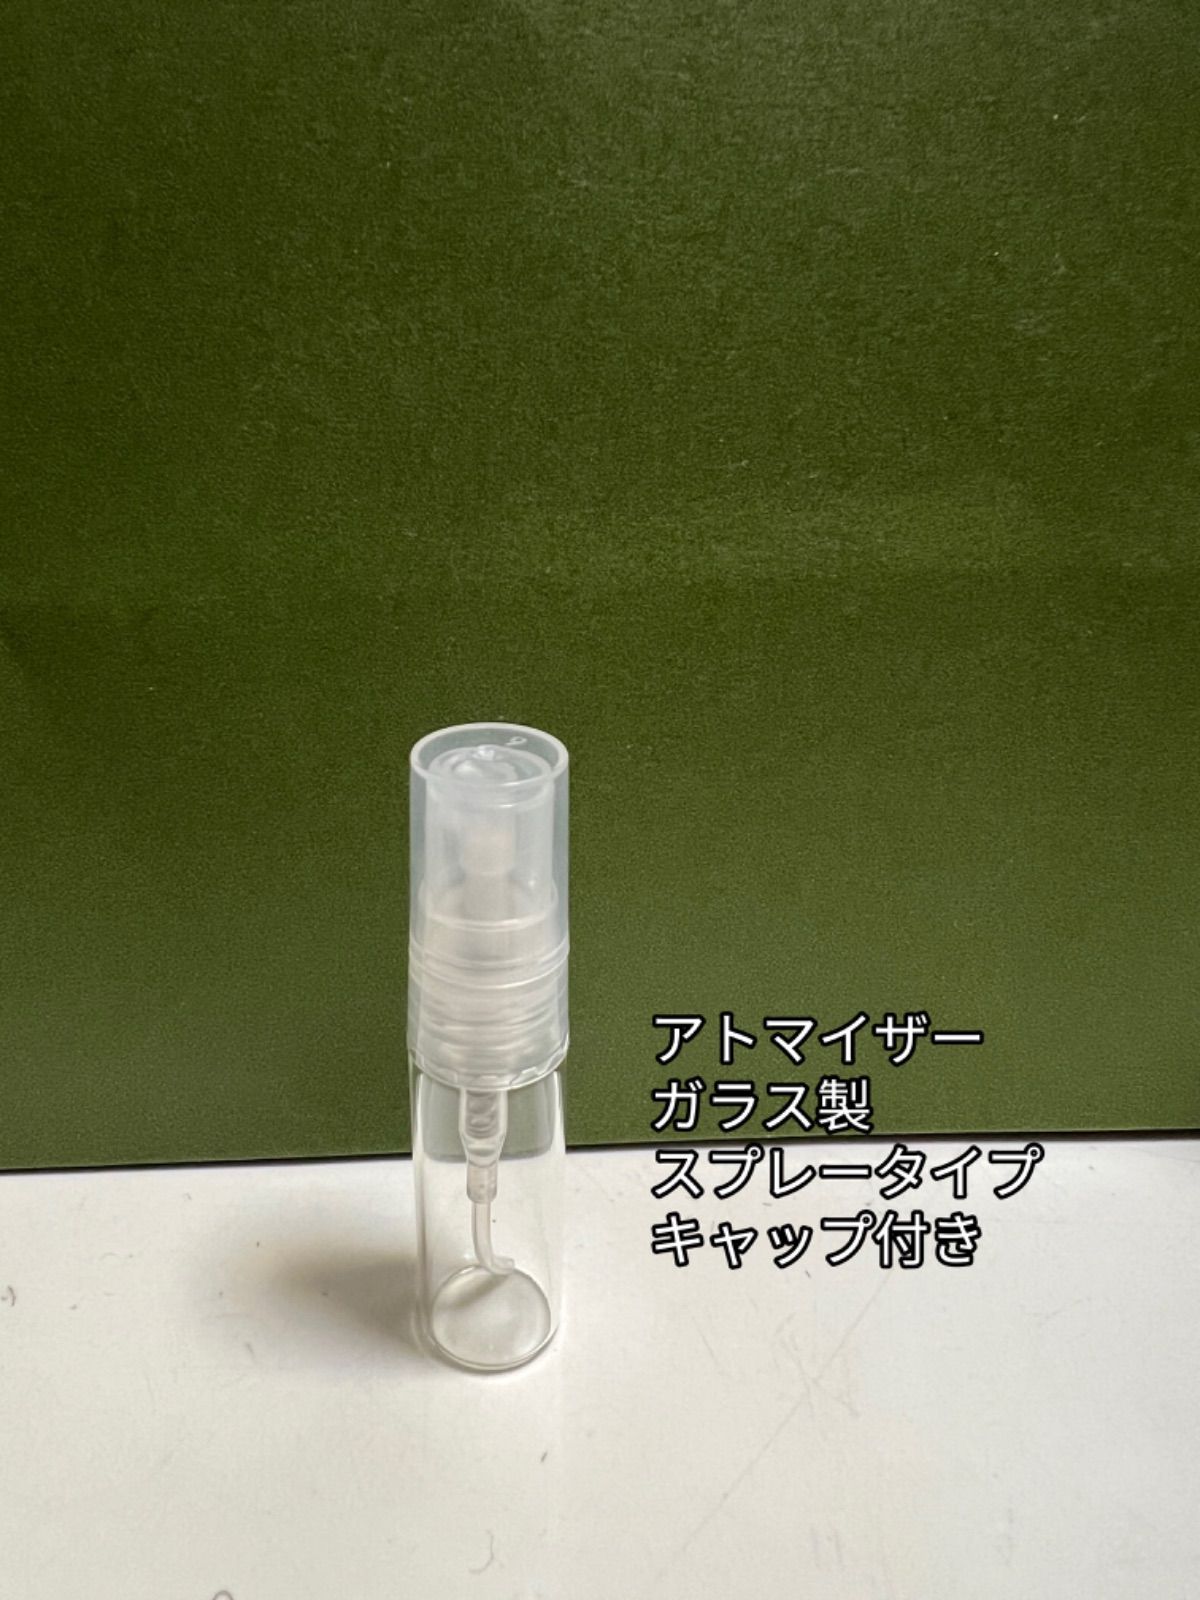 SHIRO シロ サボン ホワイトリリー ホワイトティー キンモクセイ アールグレイ アトマイザー 選べる1.5ml x 1本 - メルカリShops